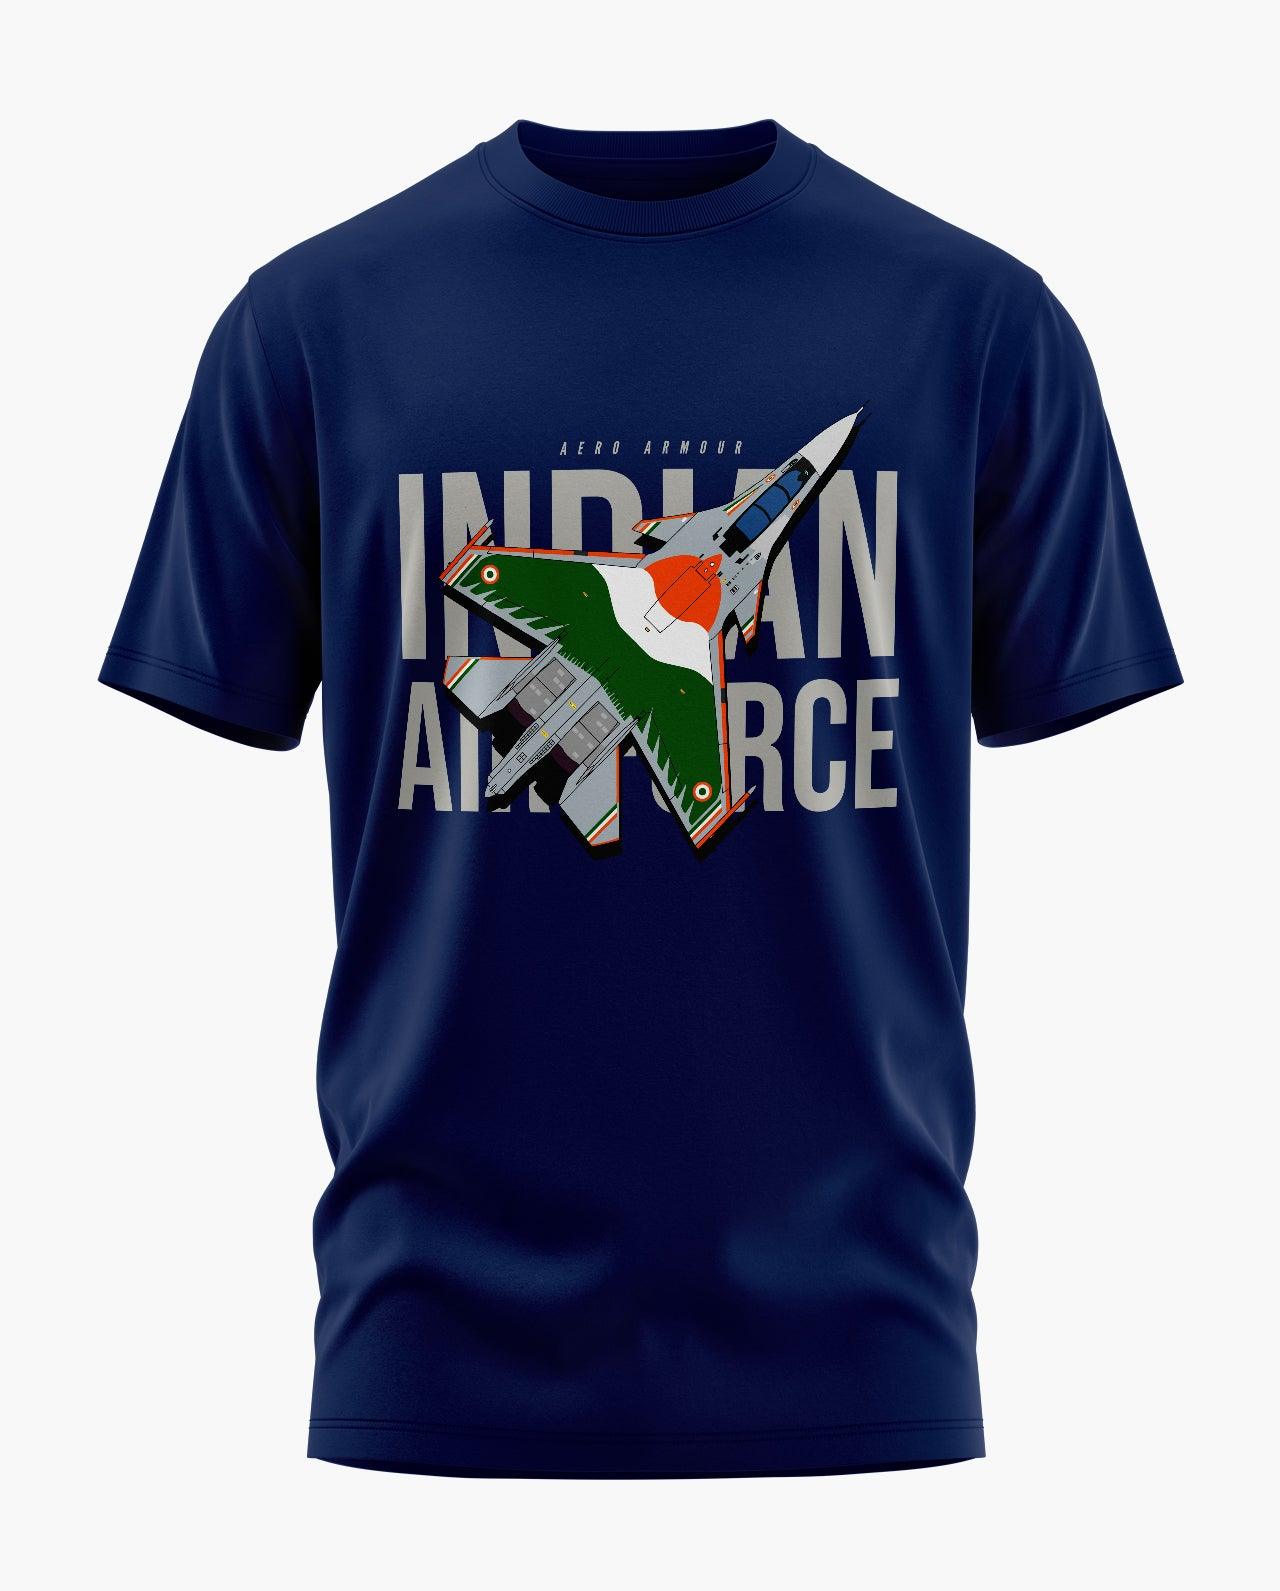 Su-30 MKI Indian Airforce T-Shirt - Aero Armour